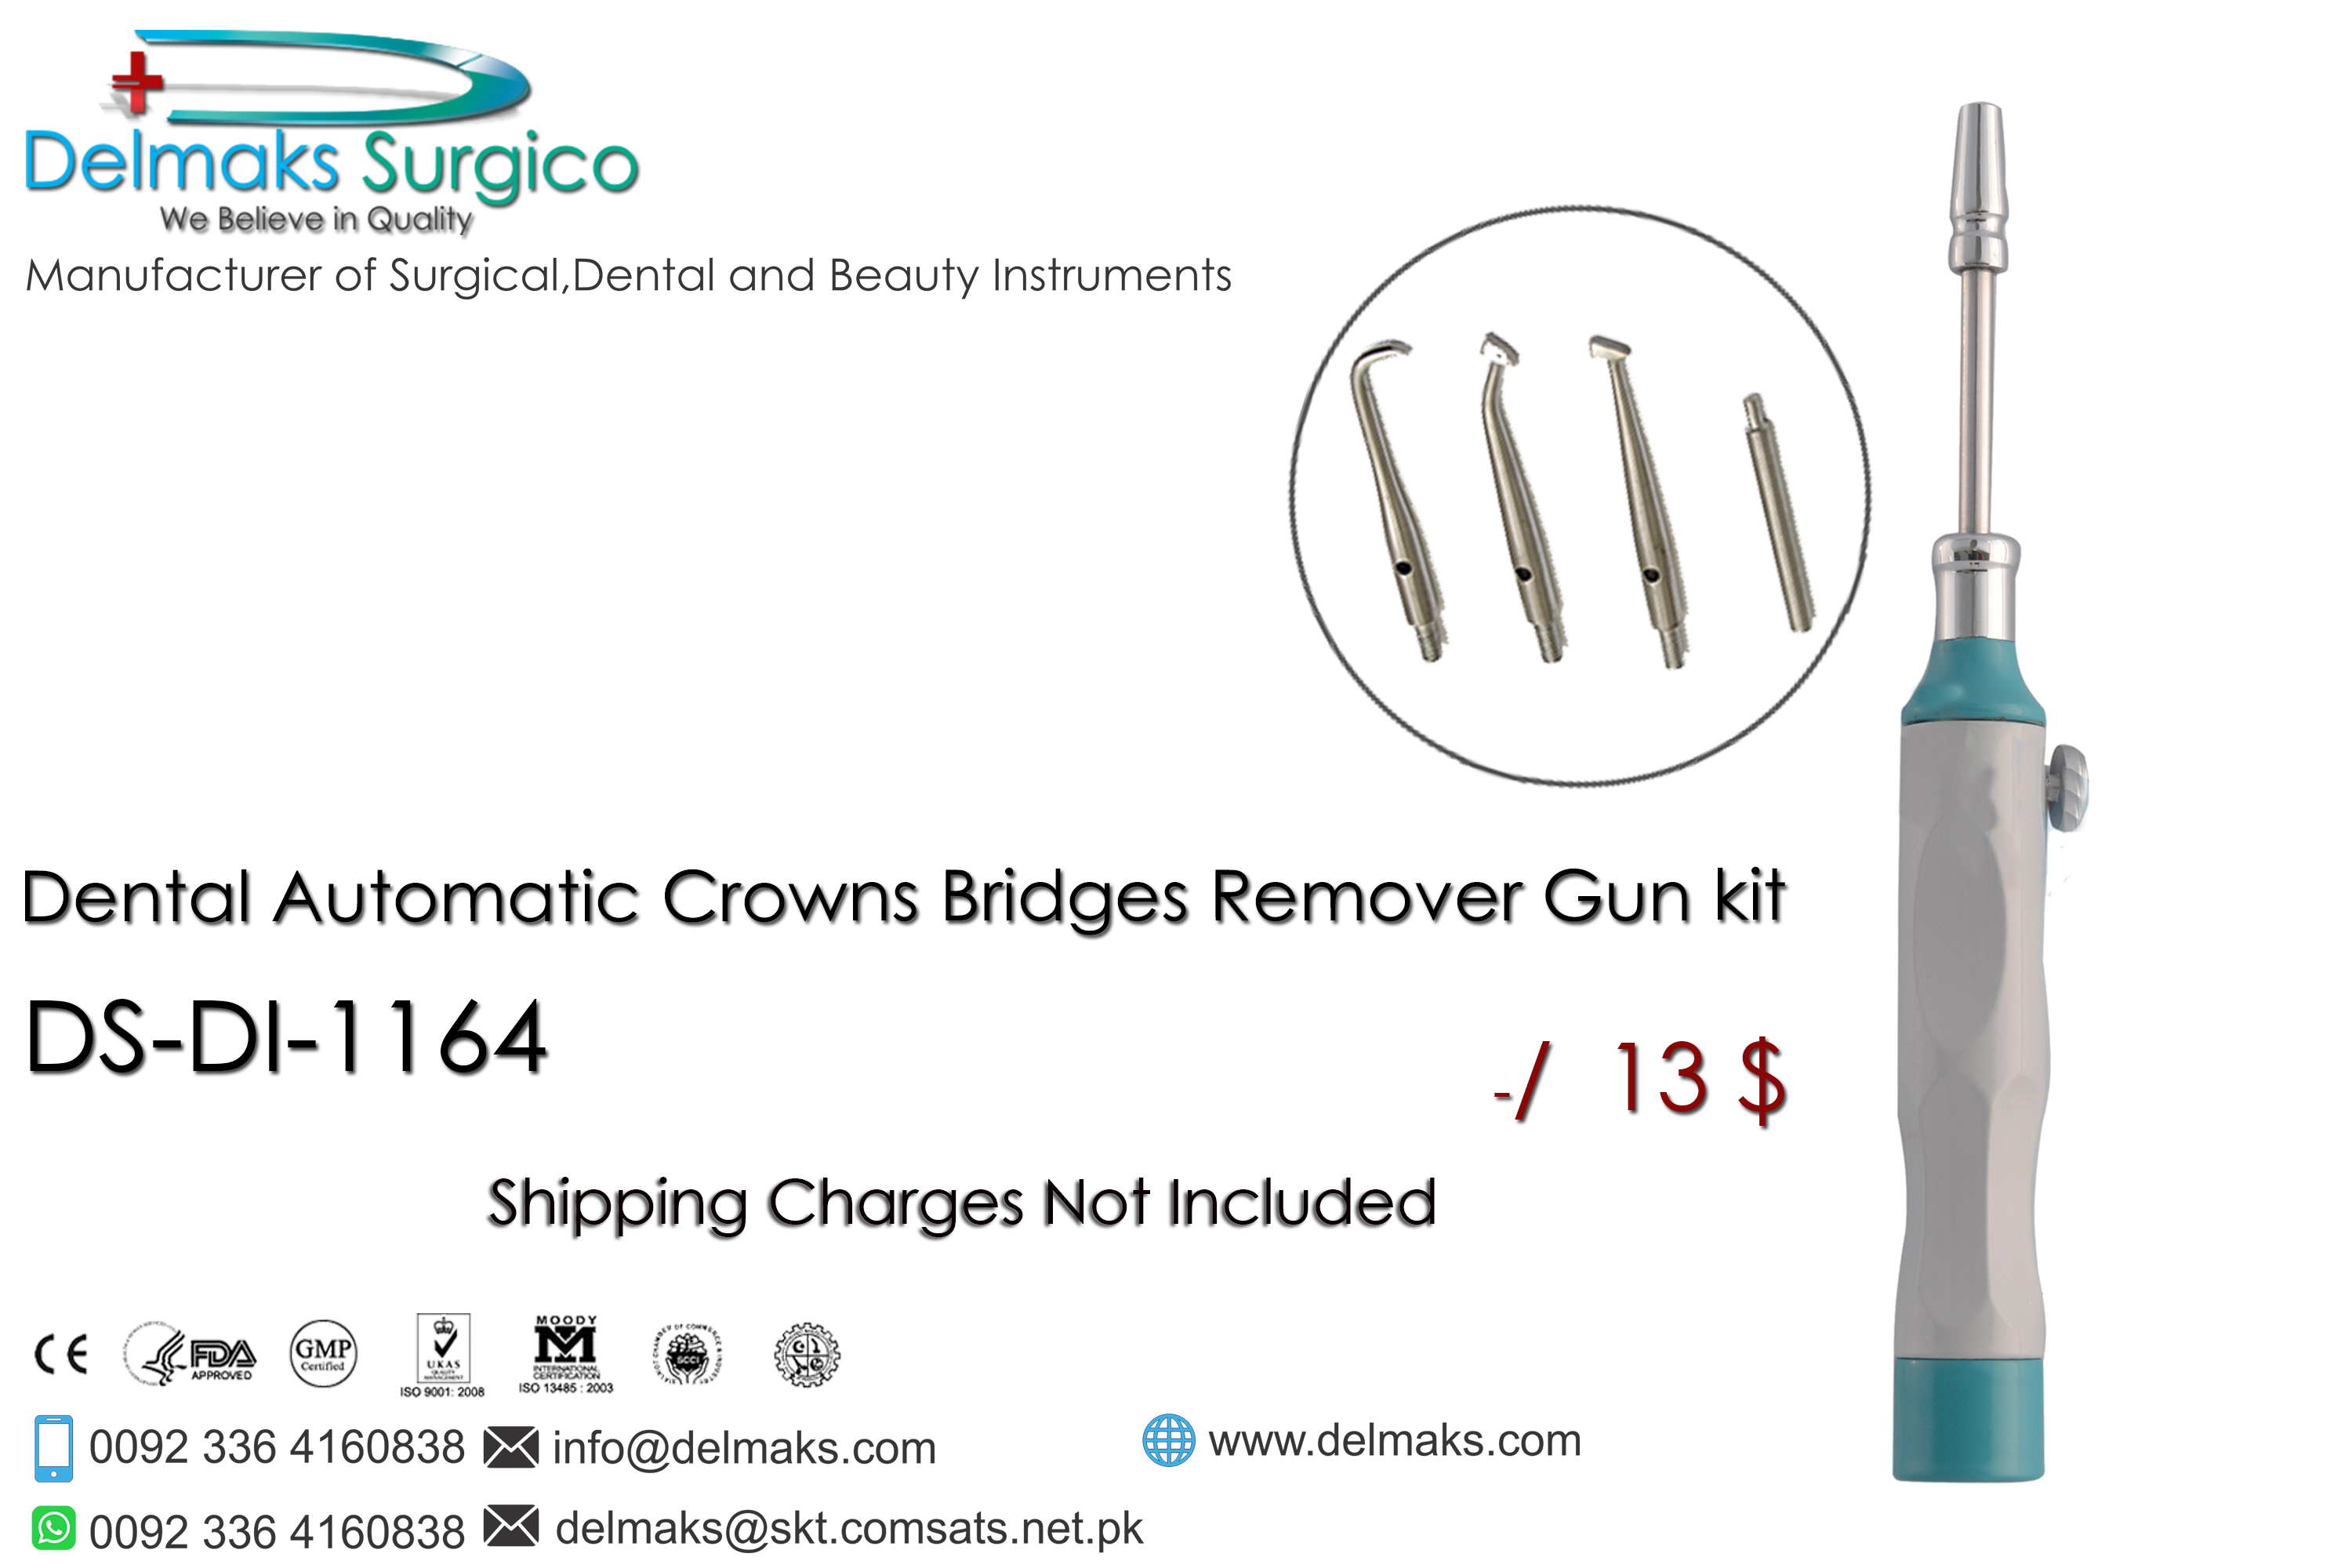 Dental Automatic Crowns Bridges Remover Gun kit-Crown Instruments-Orthodontics-Orthodontic Pliers-Instruments-Dental Instruments-Extracting Forceps-Delmaks Surgico-Dental Implants-Surgical Instruments